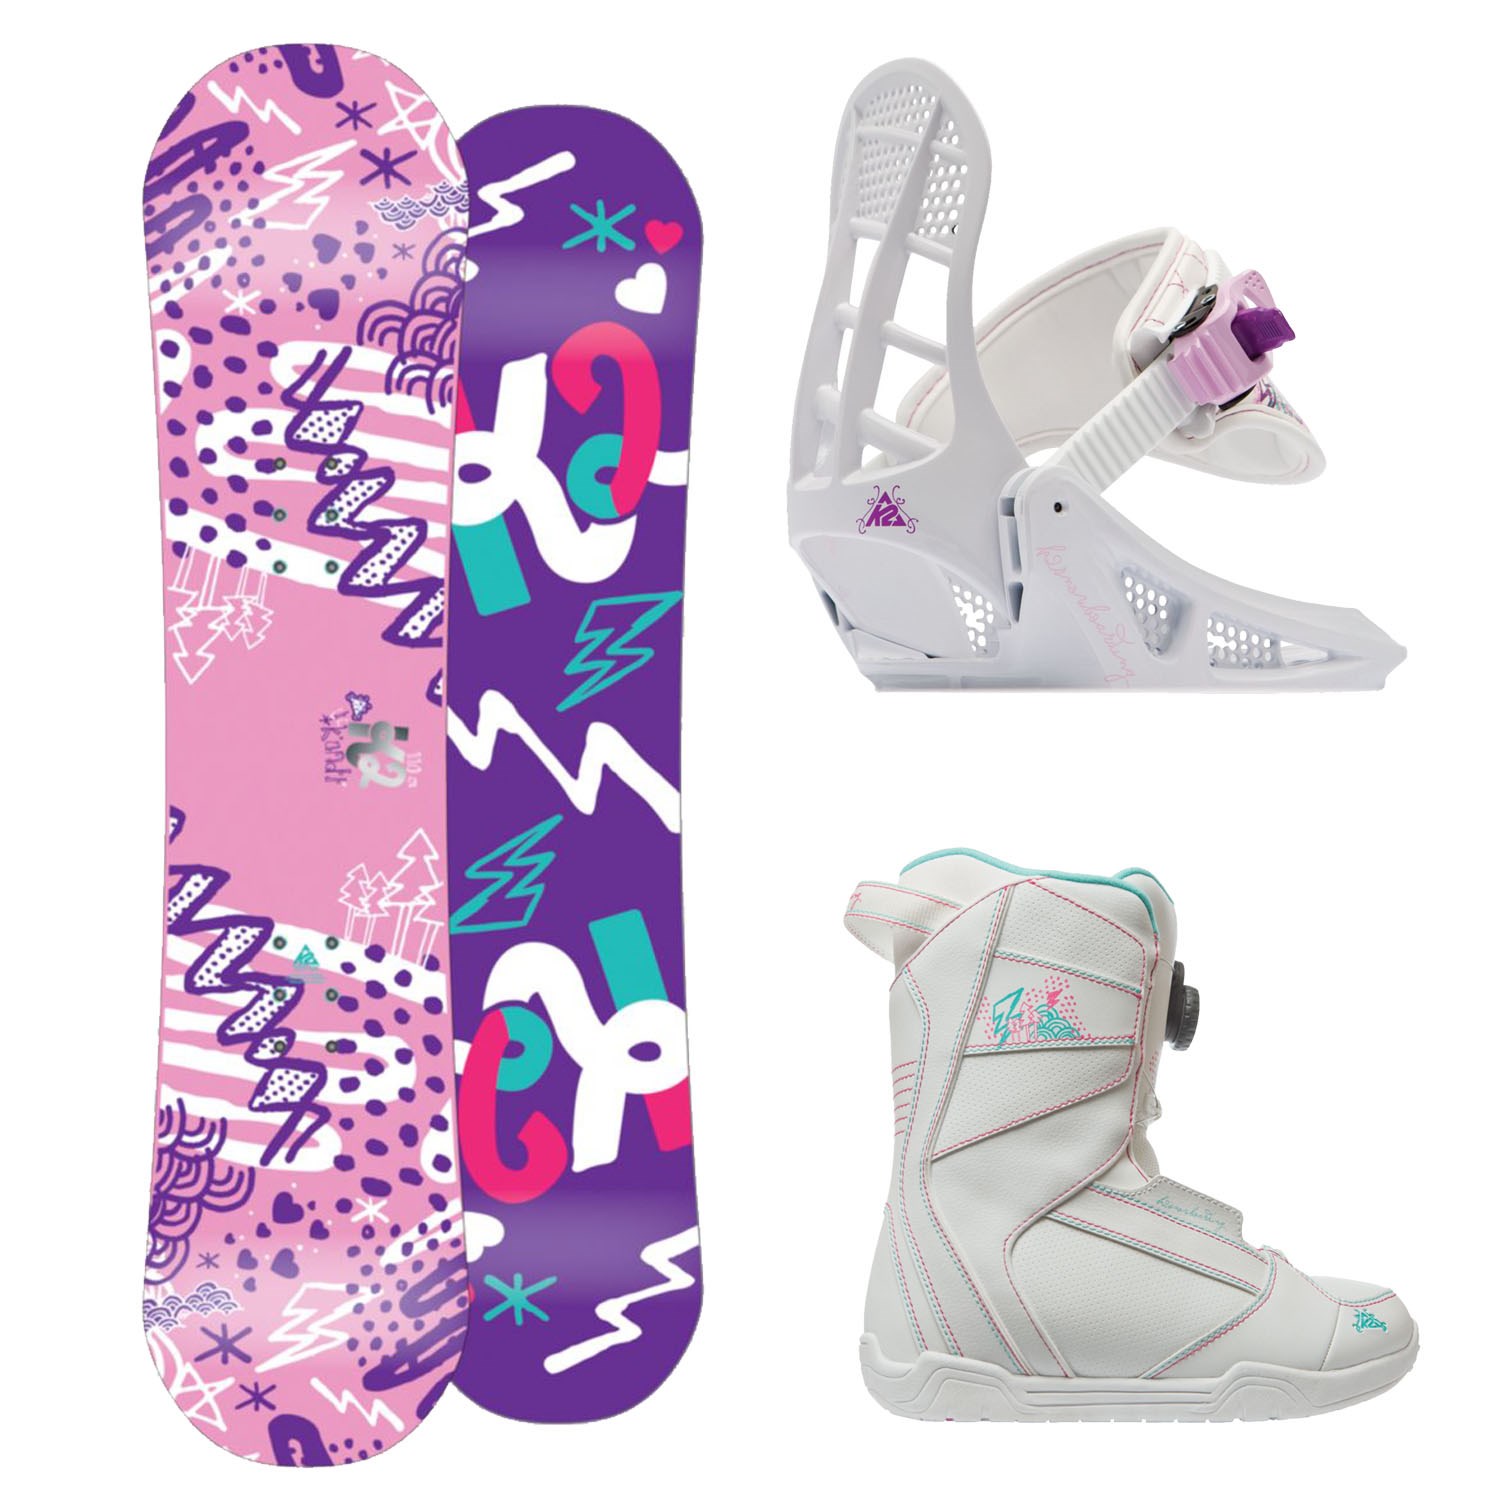 K2 Grom Pack Complete Jr. Snowboard Package Li'l Kandi Rocker